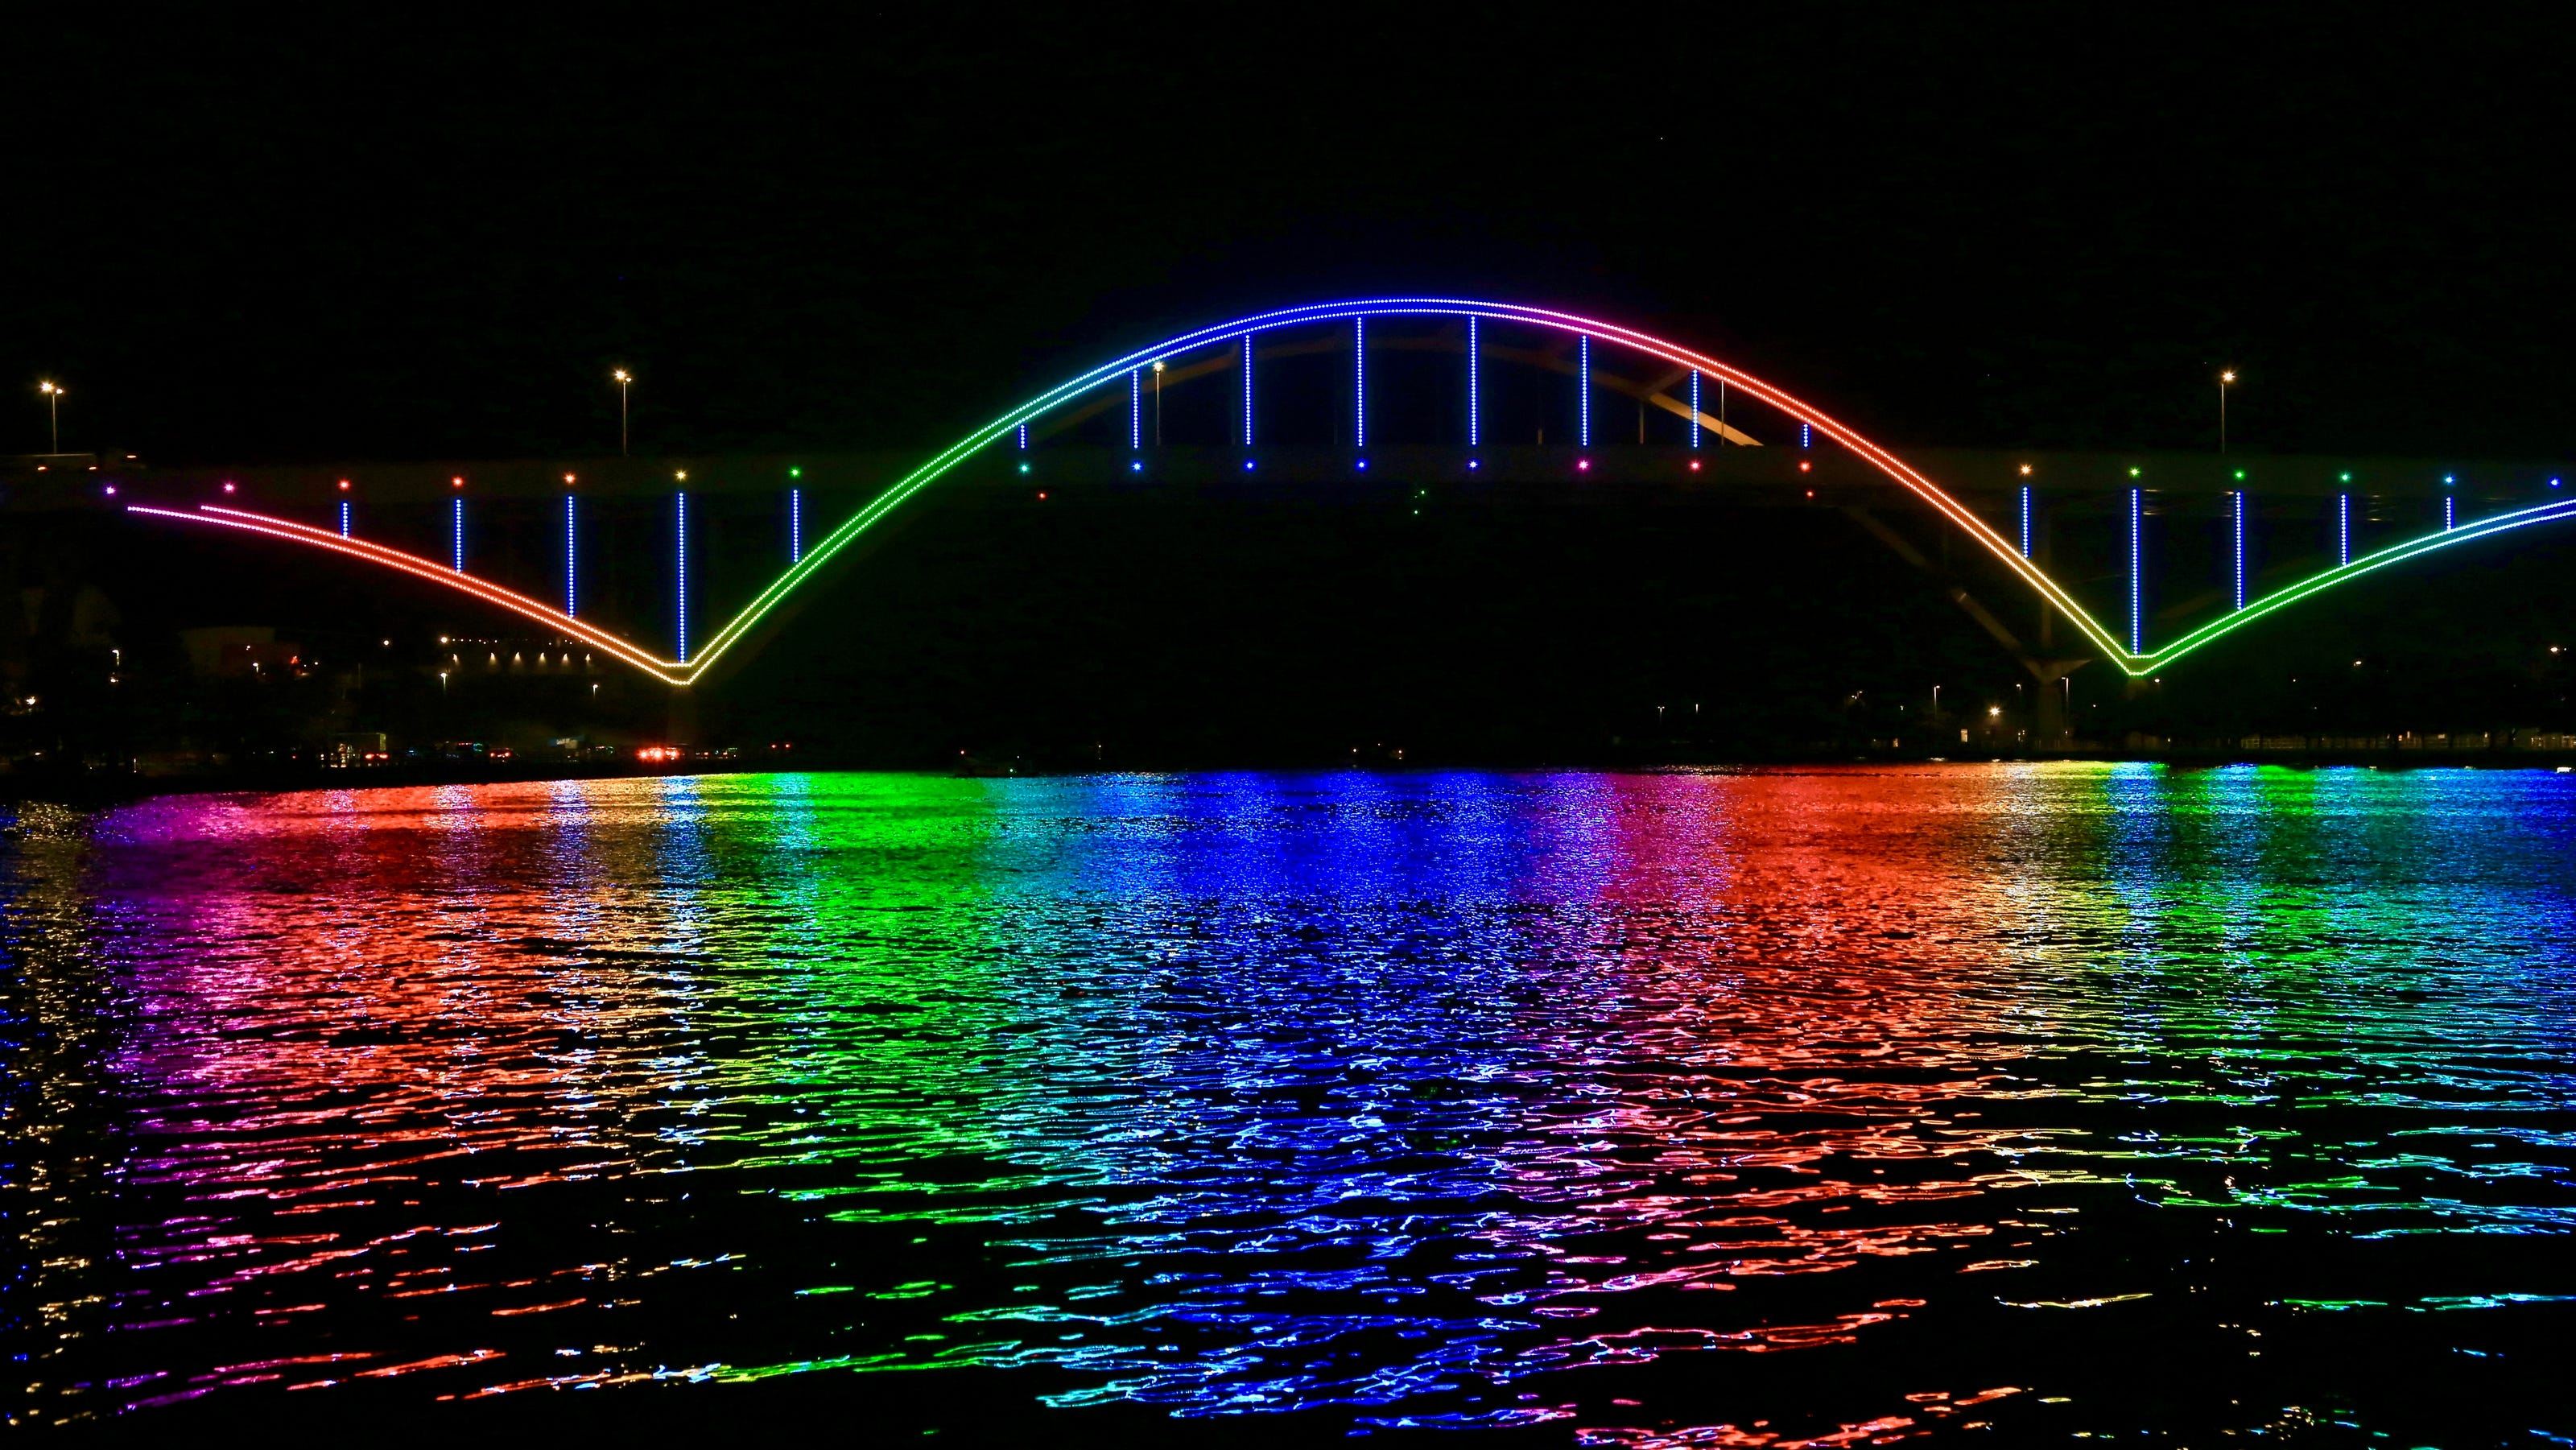 Misbrug Synes Pekkadillo Light the Hoan Milwaukee: Bridge to be lit nightly after ceremony